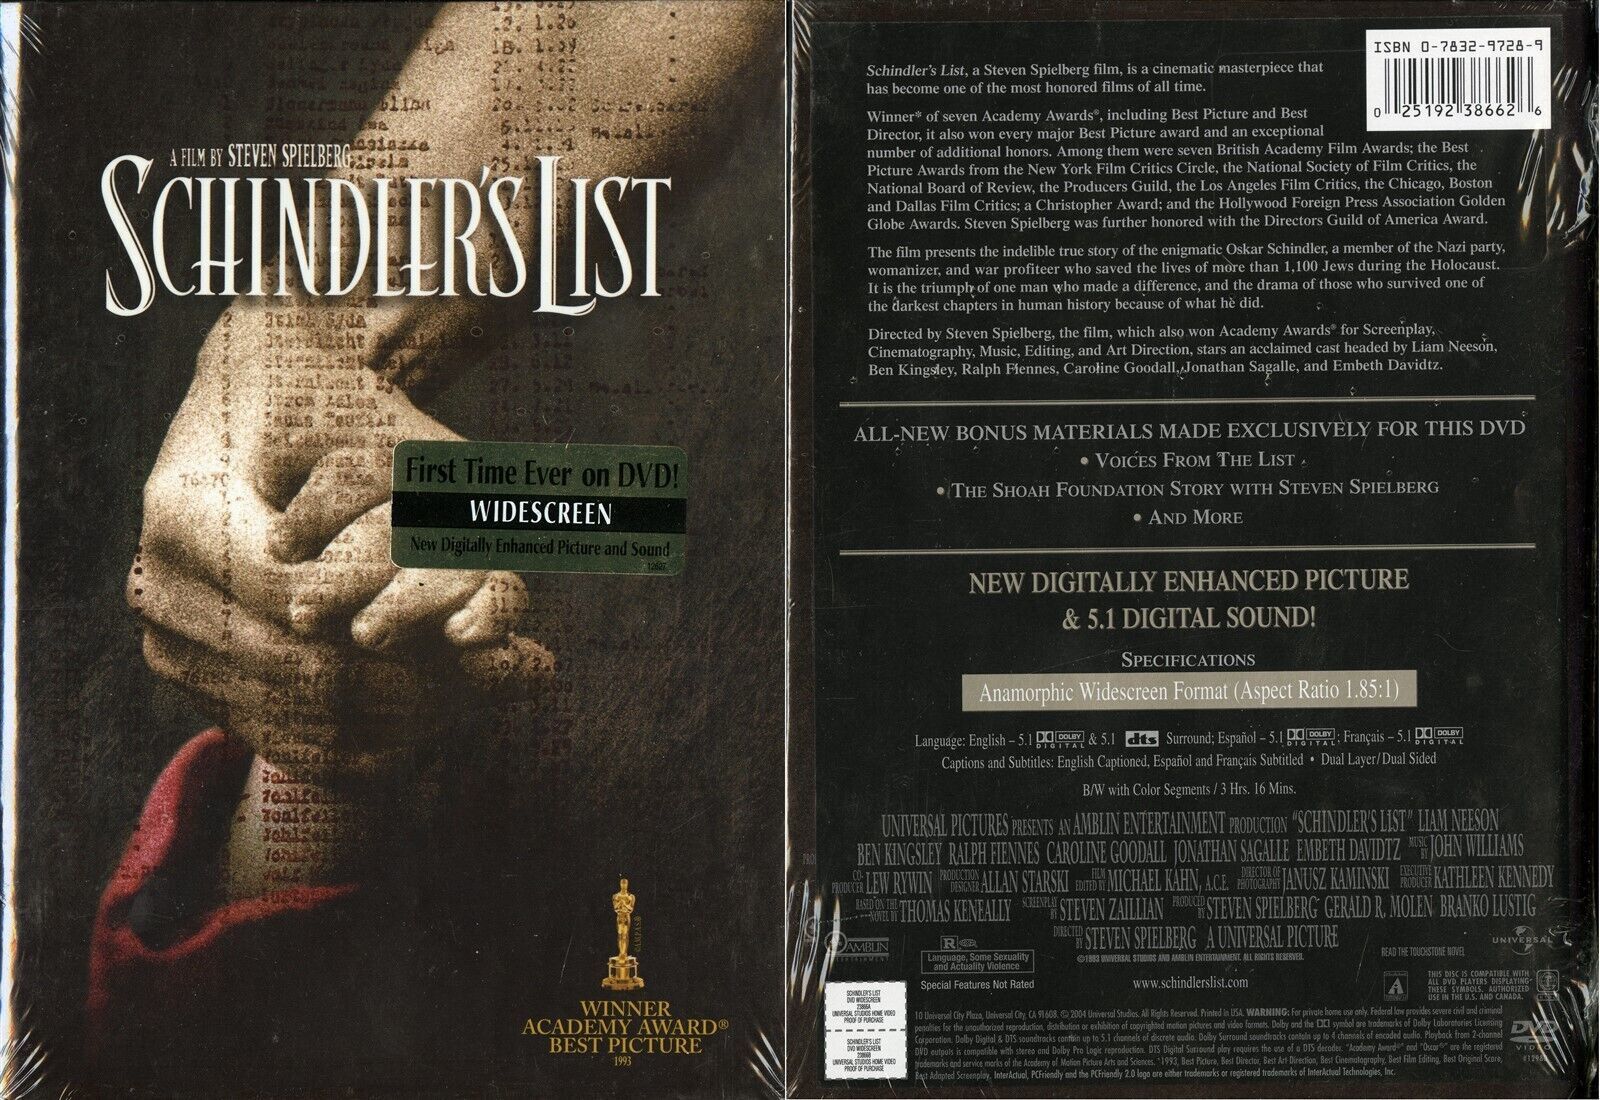 SCHINDLER'S LIST WS DVD DIGIBOOK BEN KINGSLEY RALPH FIENNES UNIVERSAL VIDEO NEW - $9.95